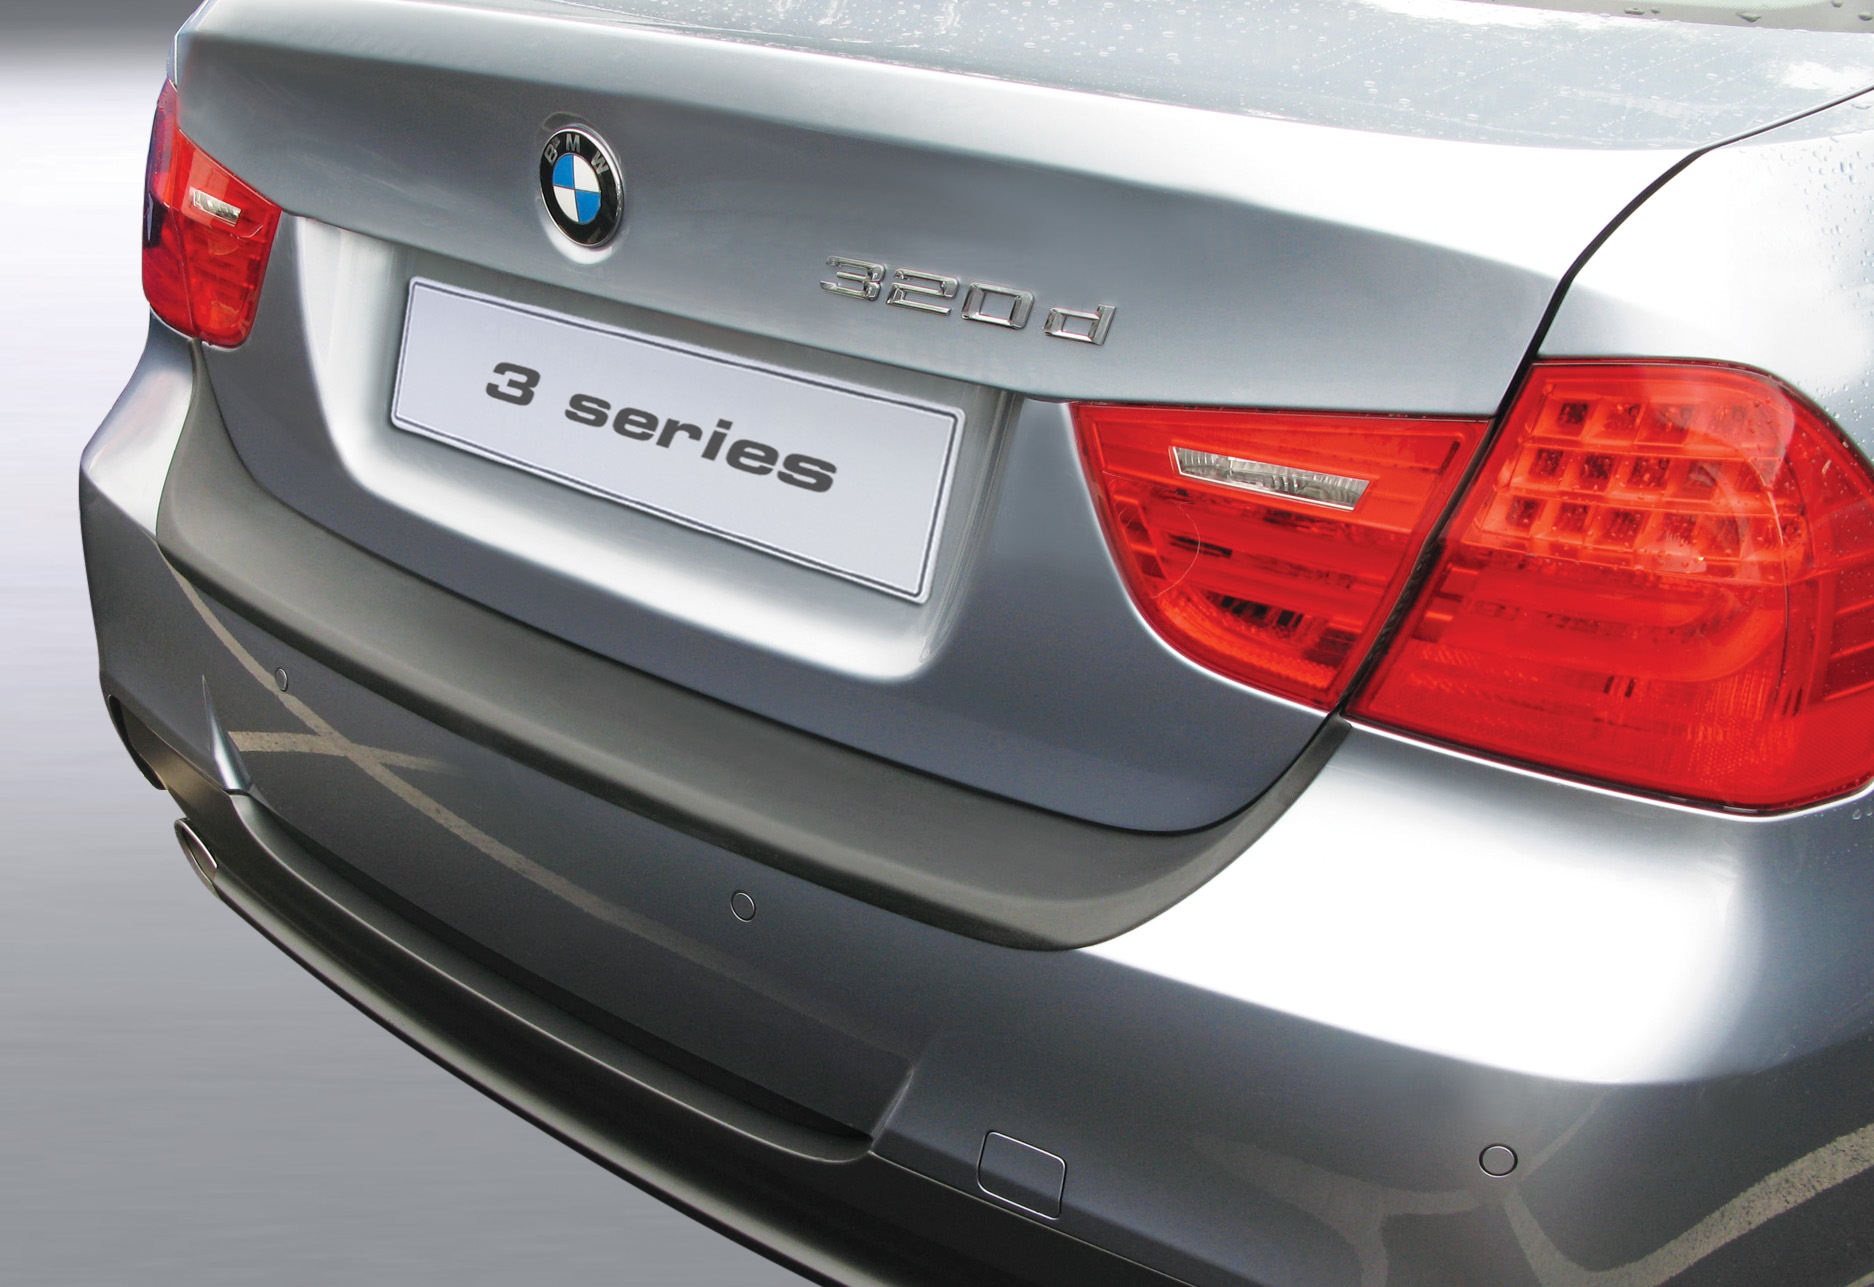 BMW 3er Limo Jg. 2011- Ladekantenschutz - Schutzleiste in 4 Varianten